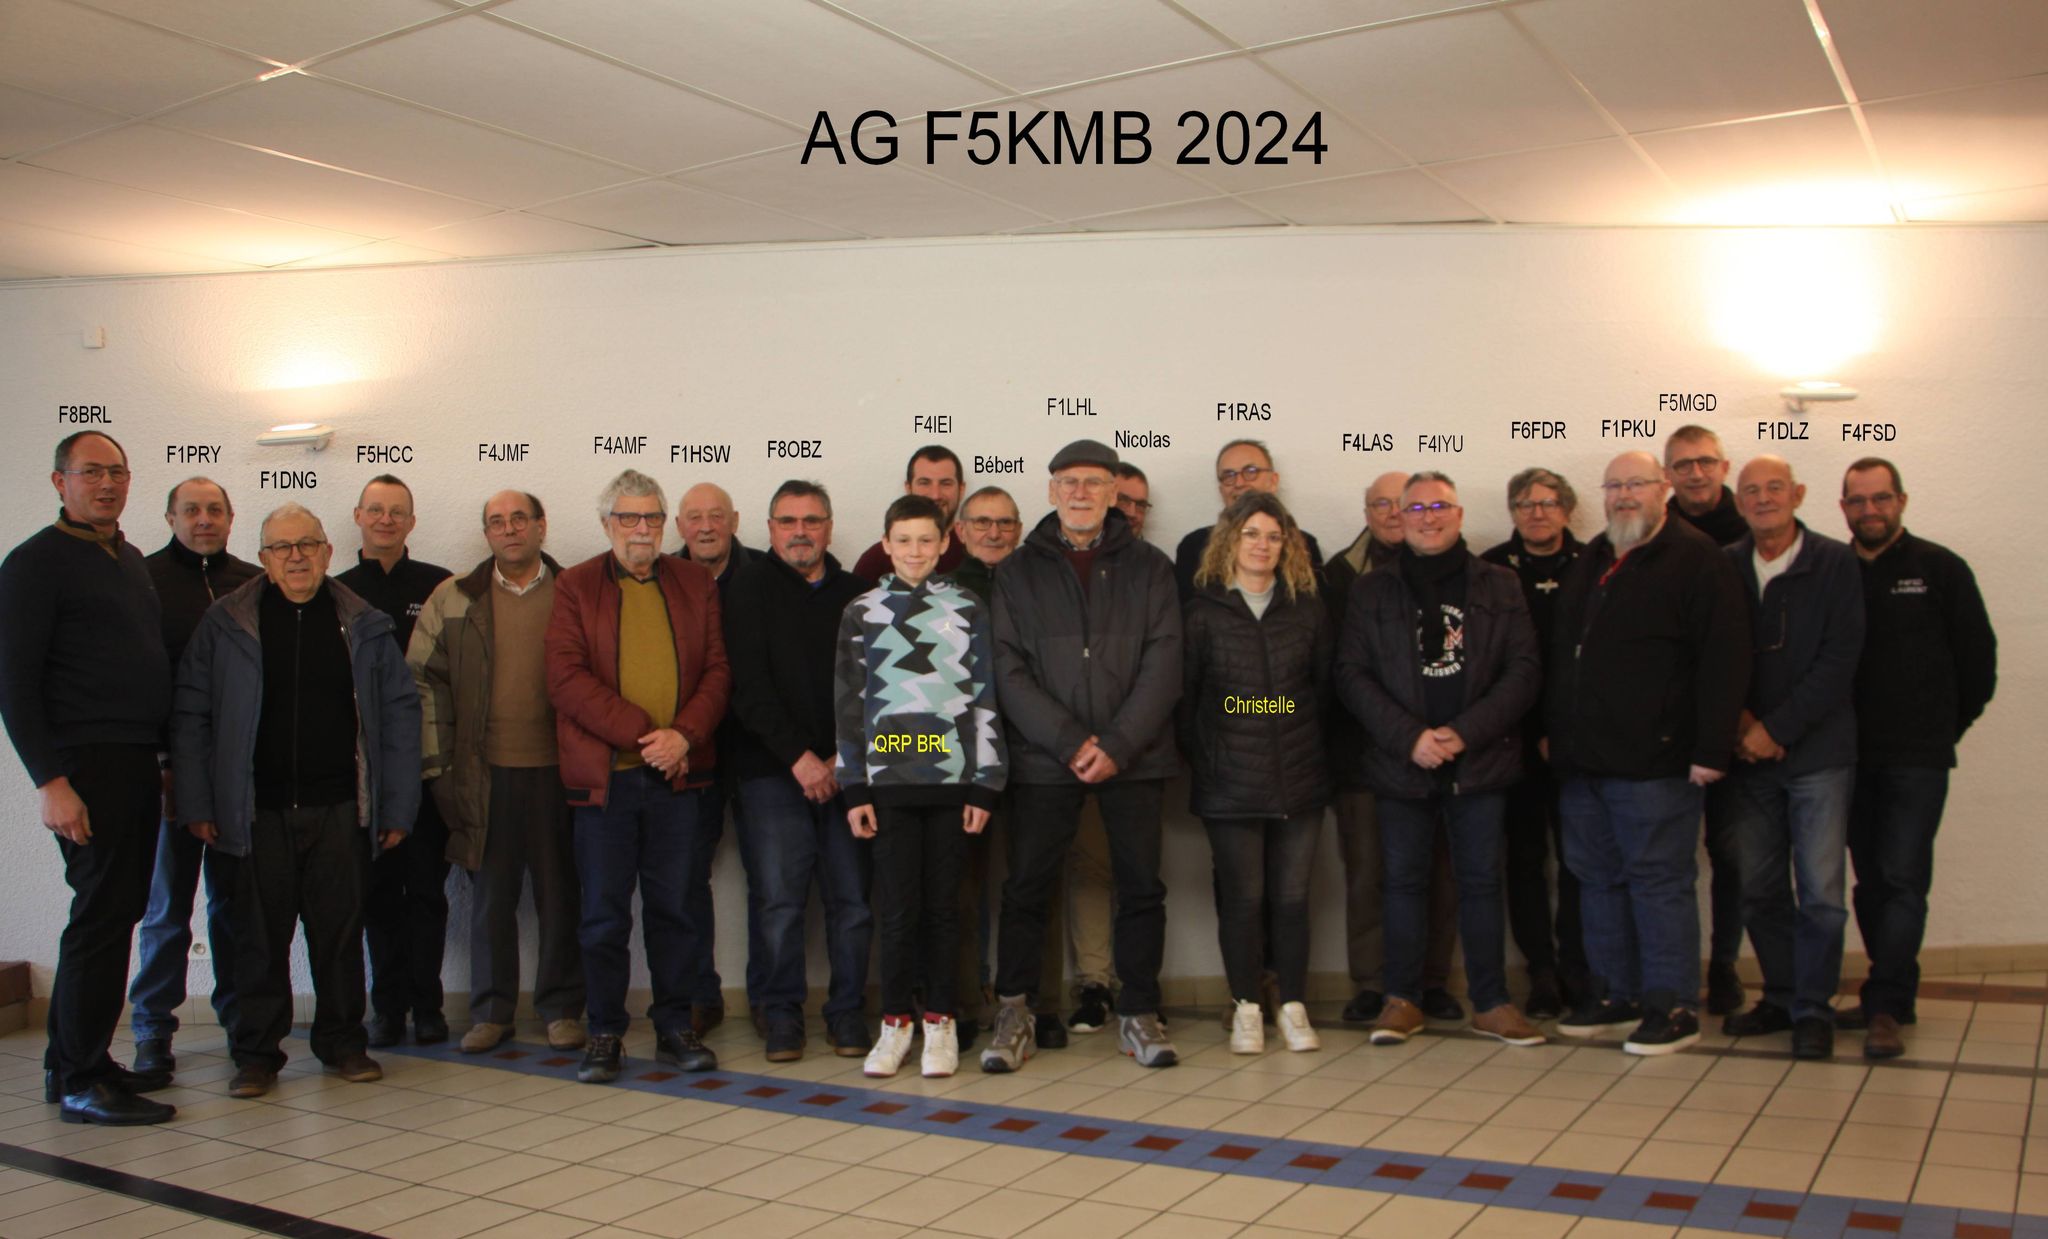 Groupe_AG_F5KMB_2024_F1DLZ.jpg